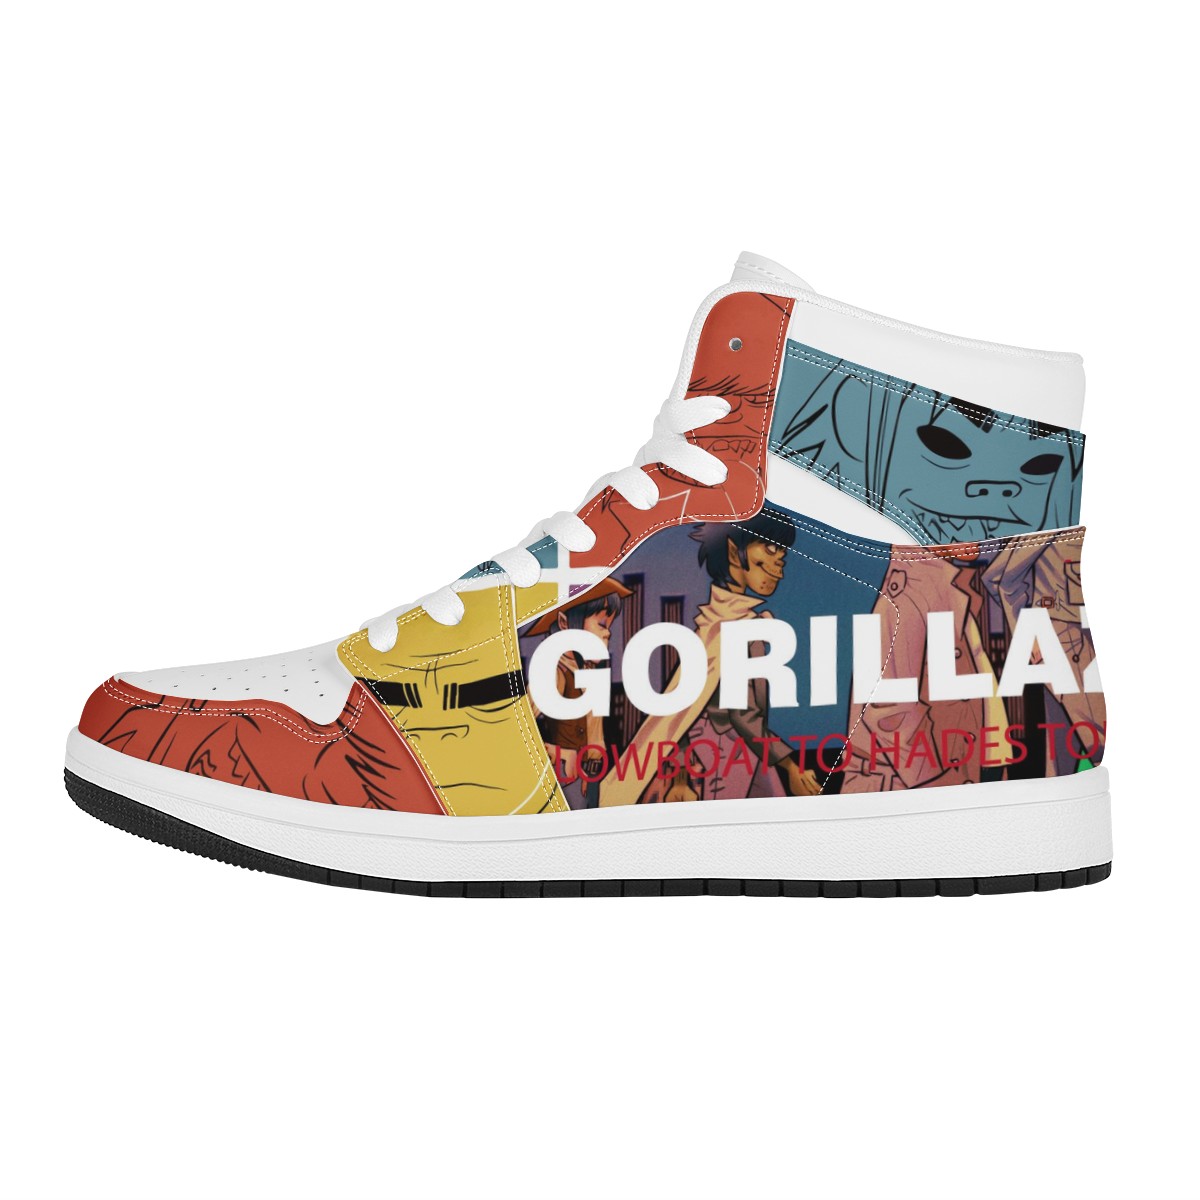 Gorillaz Custom Nike Air Jordan 1 Leather Sneaker